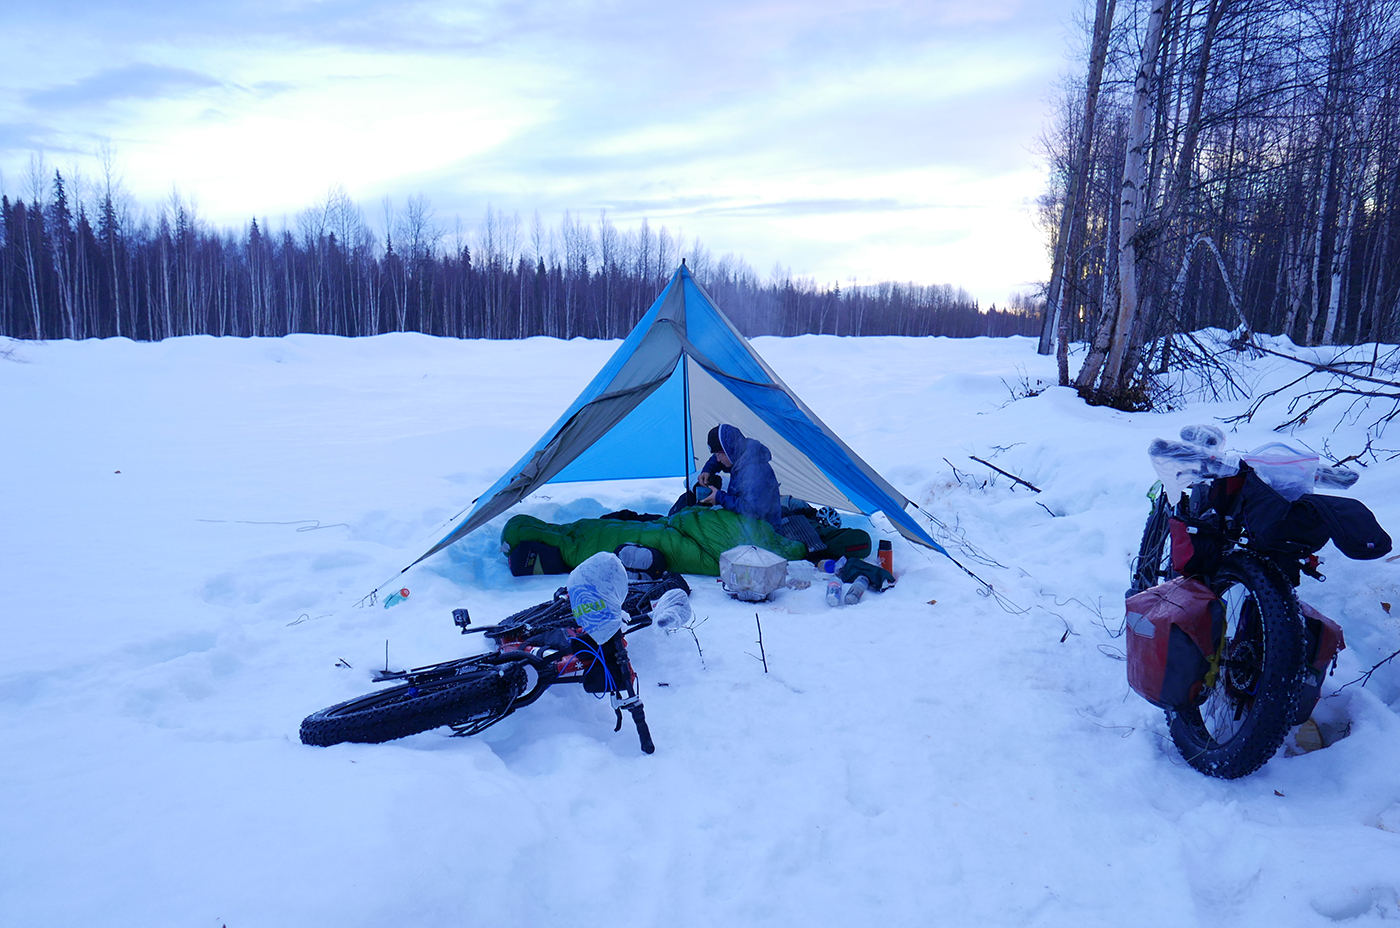 Katie breaks camp on her Iditarod adventure cycling trip.